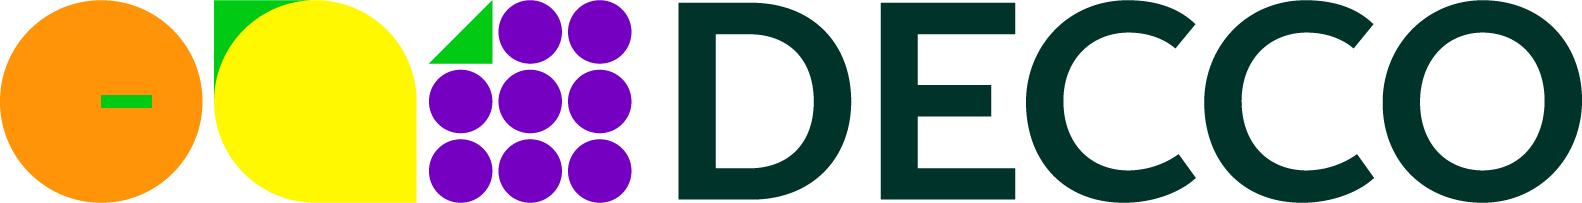 DECCO South Africa Logo